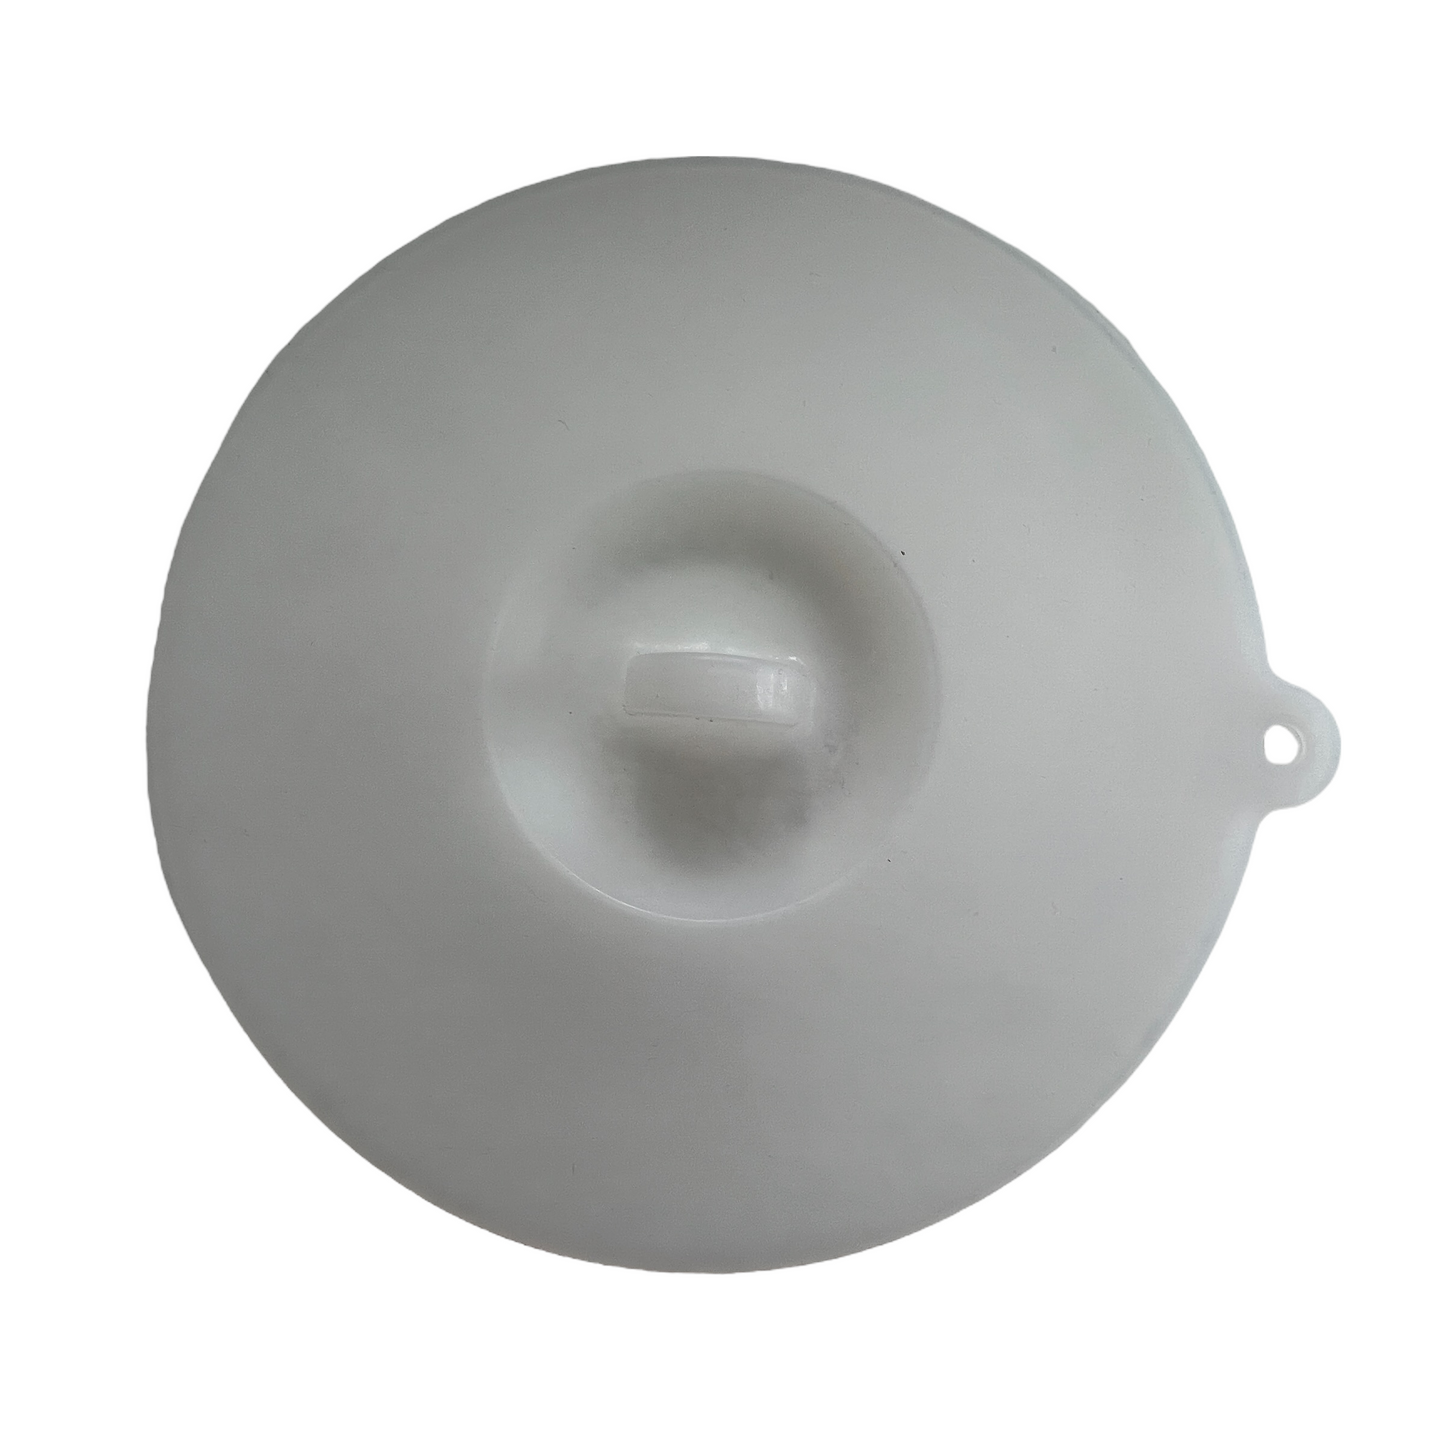 Silicone Bowl Cover  (3 Piece, multi size)  SPIRIT SPARKPLUGS   